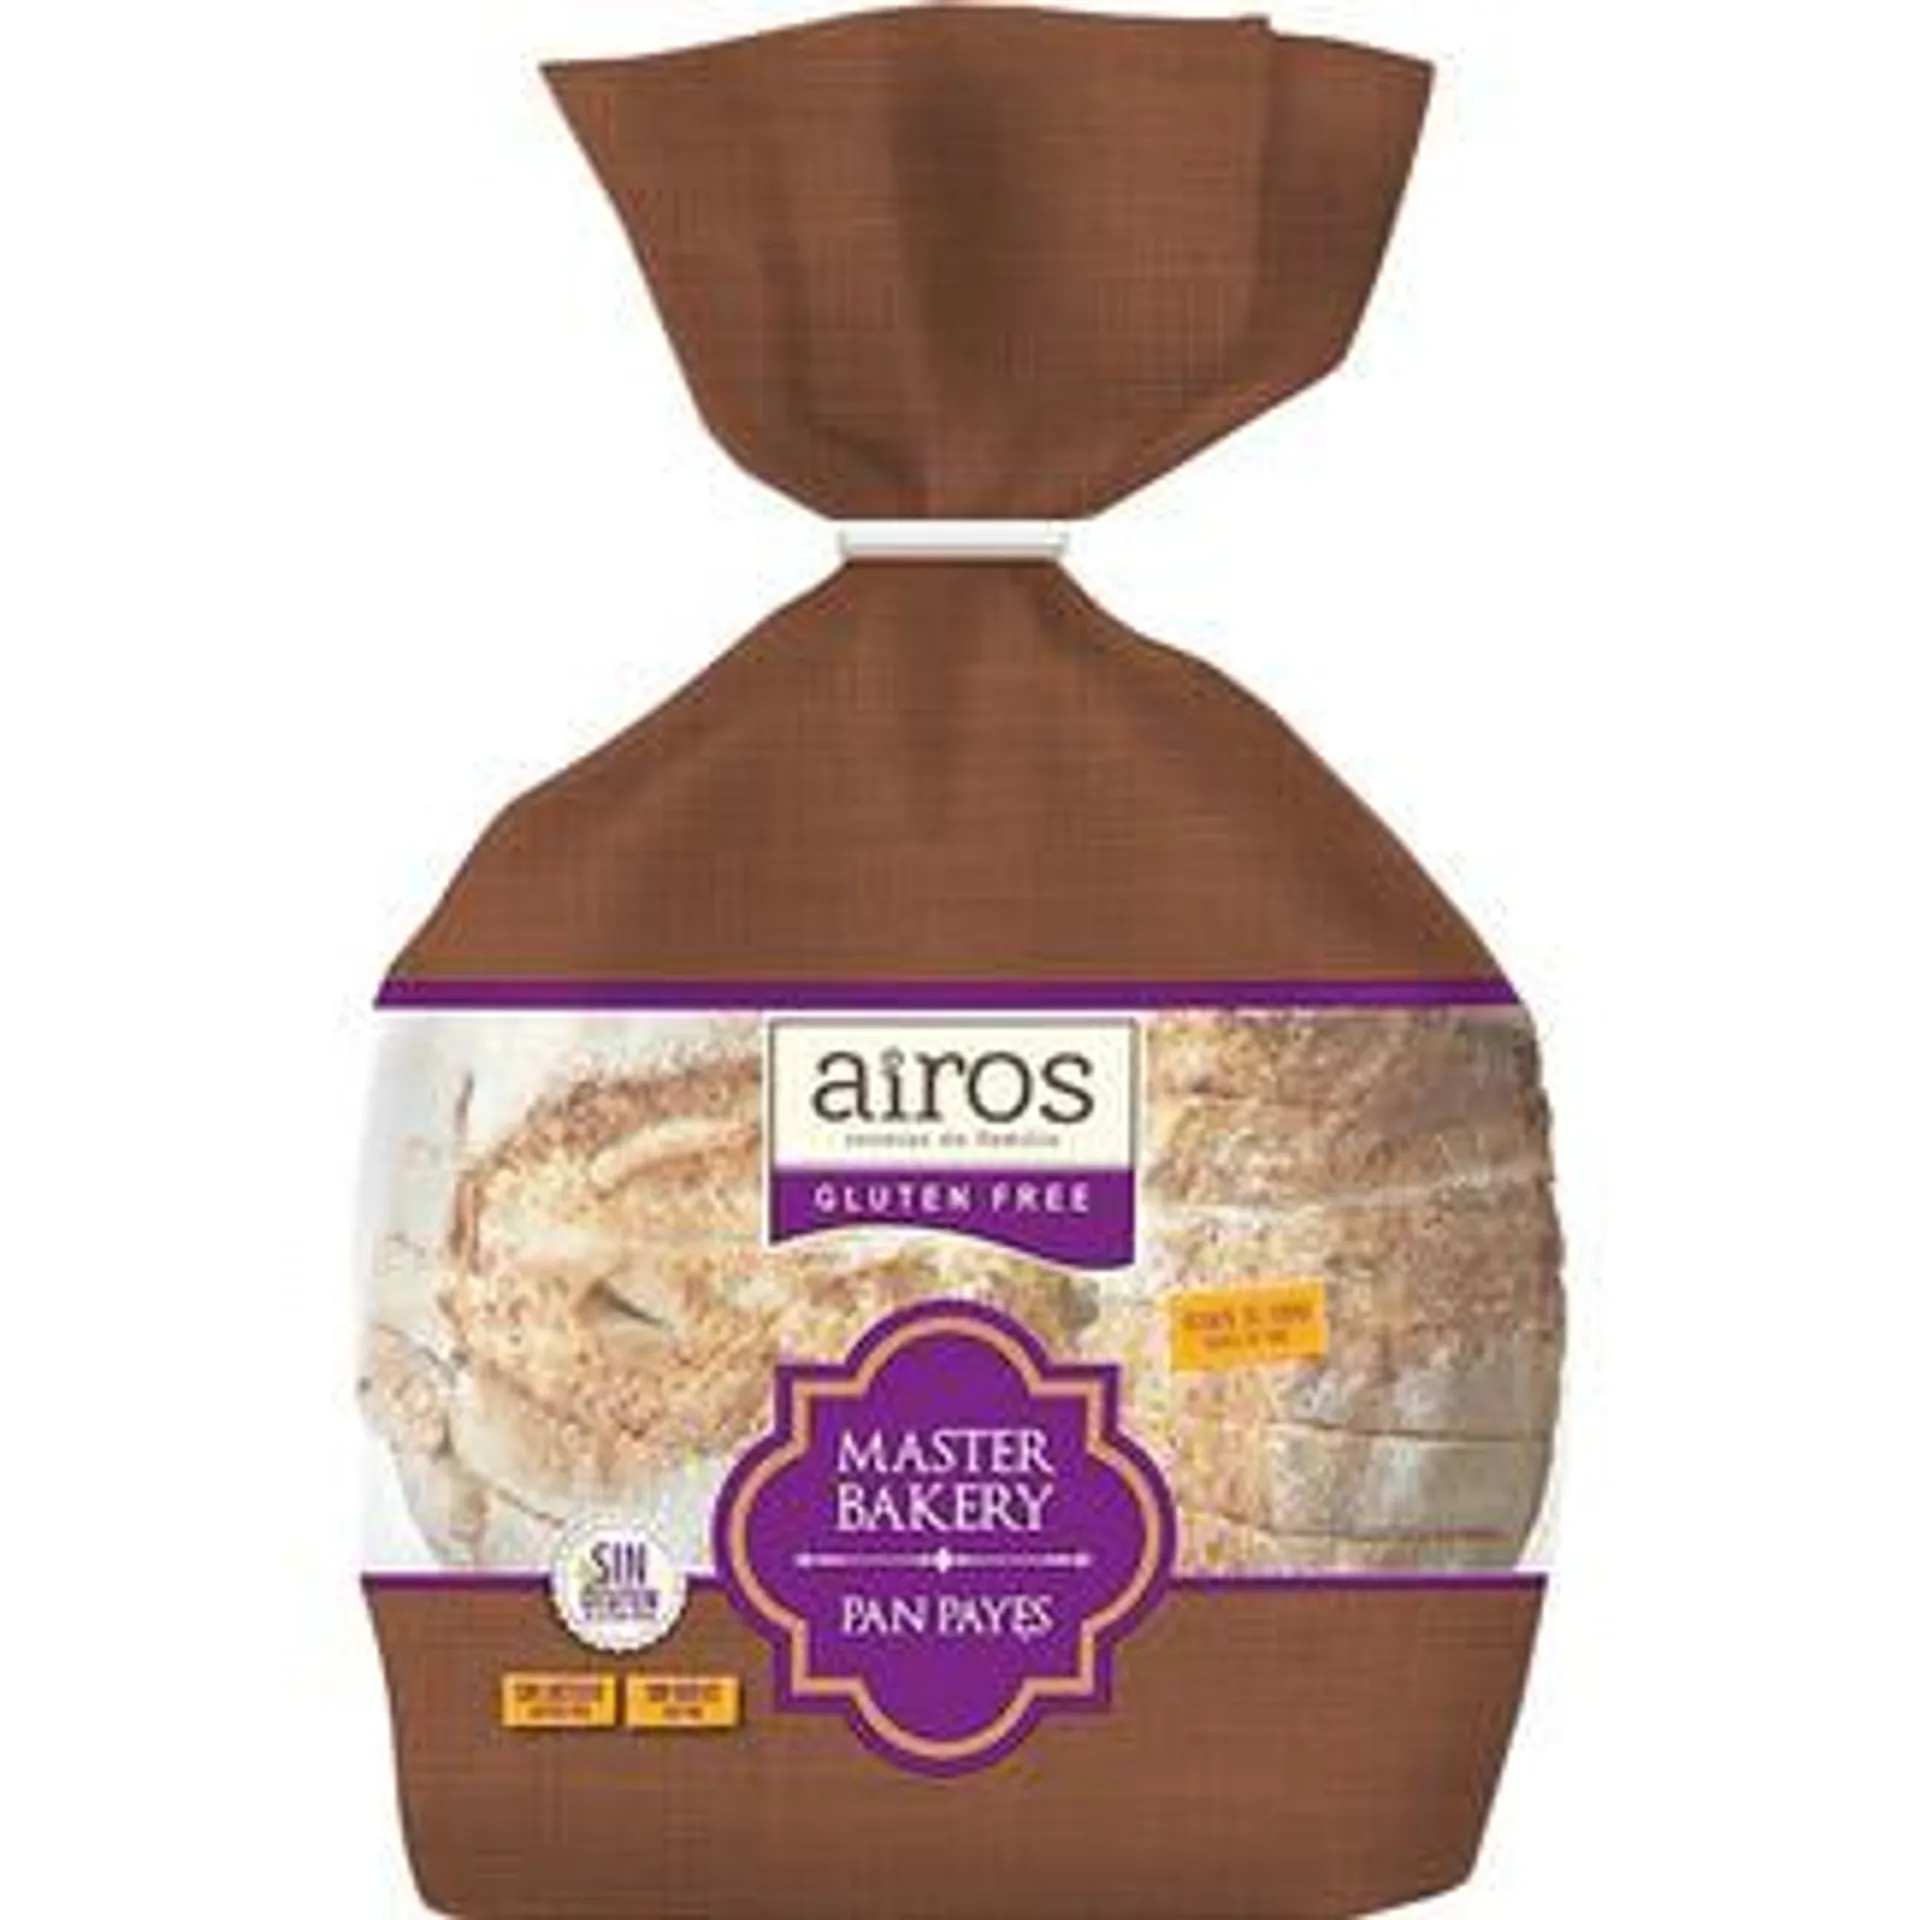 AIROS Master Bakery pan payés en rebanadas sin gluten y sin lactosa bolsa 300 g